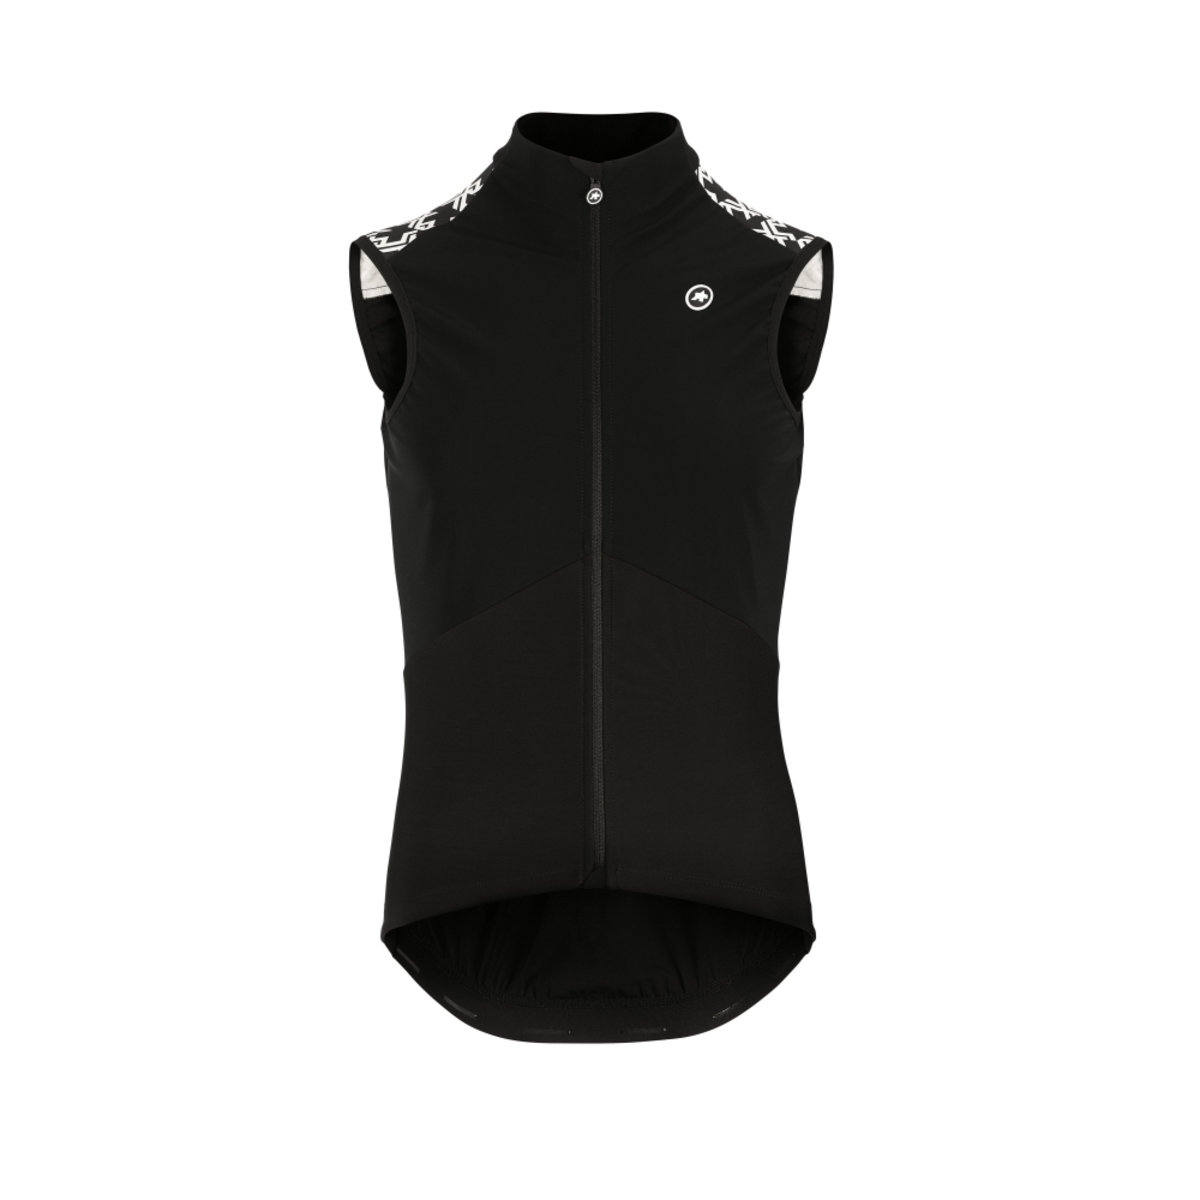 Жилетка ASSOS Mille GT Spring Fall Airblock Vest Black Series, мужская, черная с белым, L